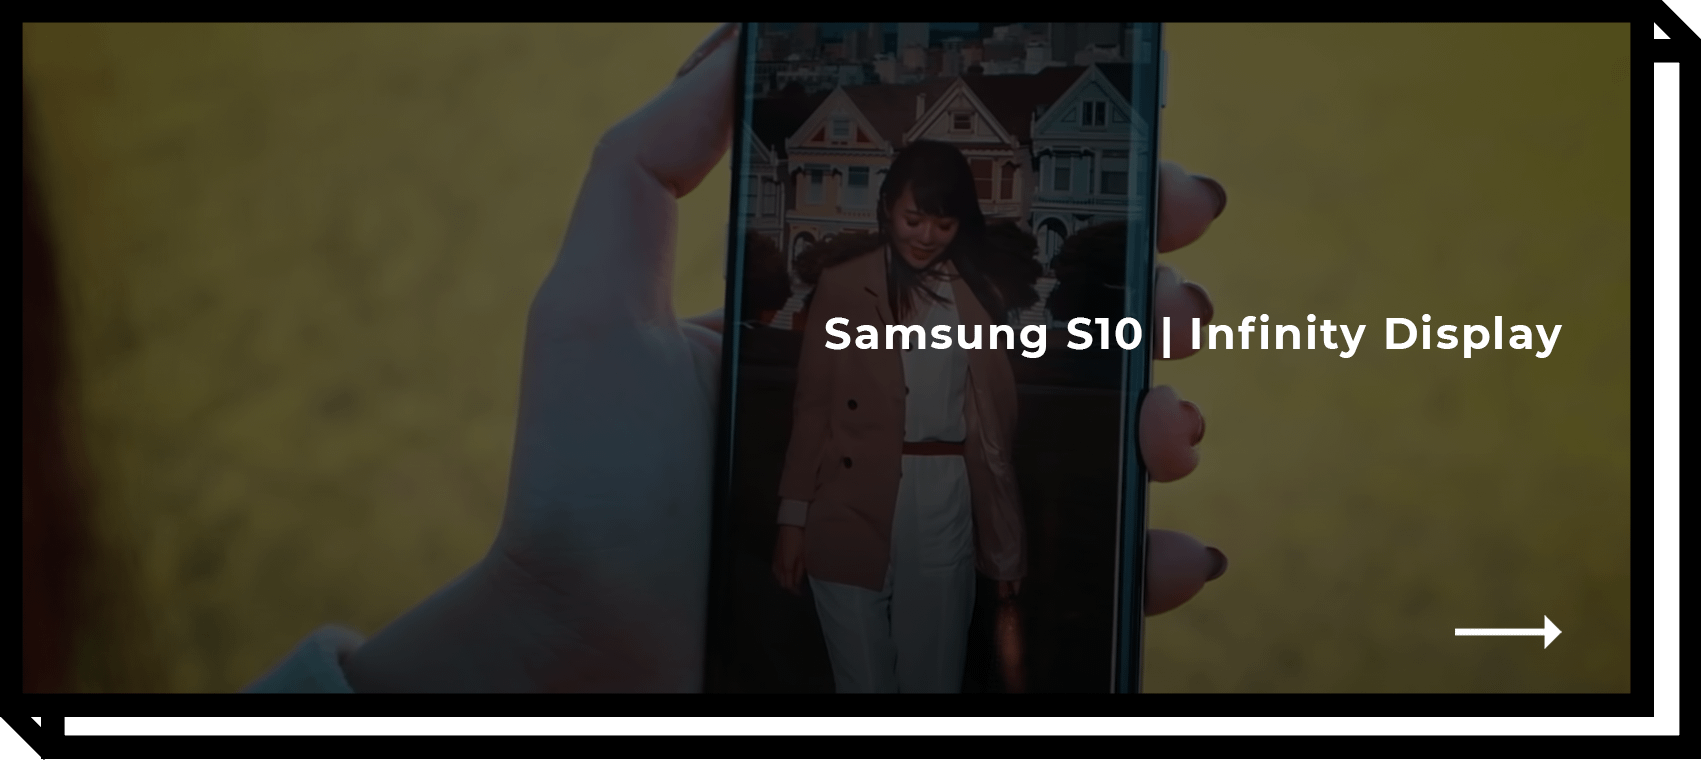 Samsung S10 - Infinity Display